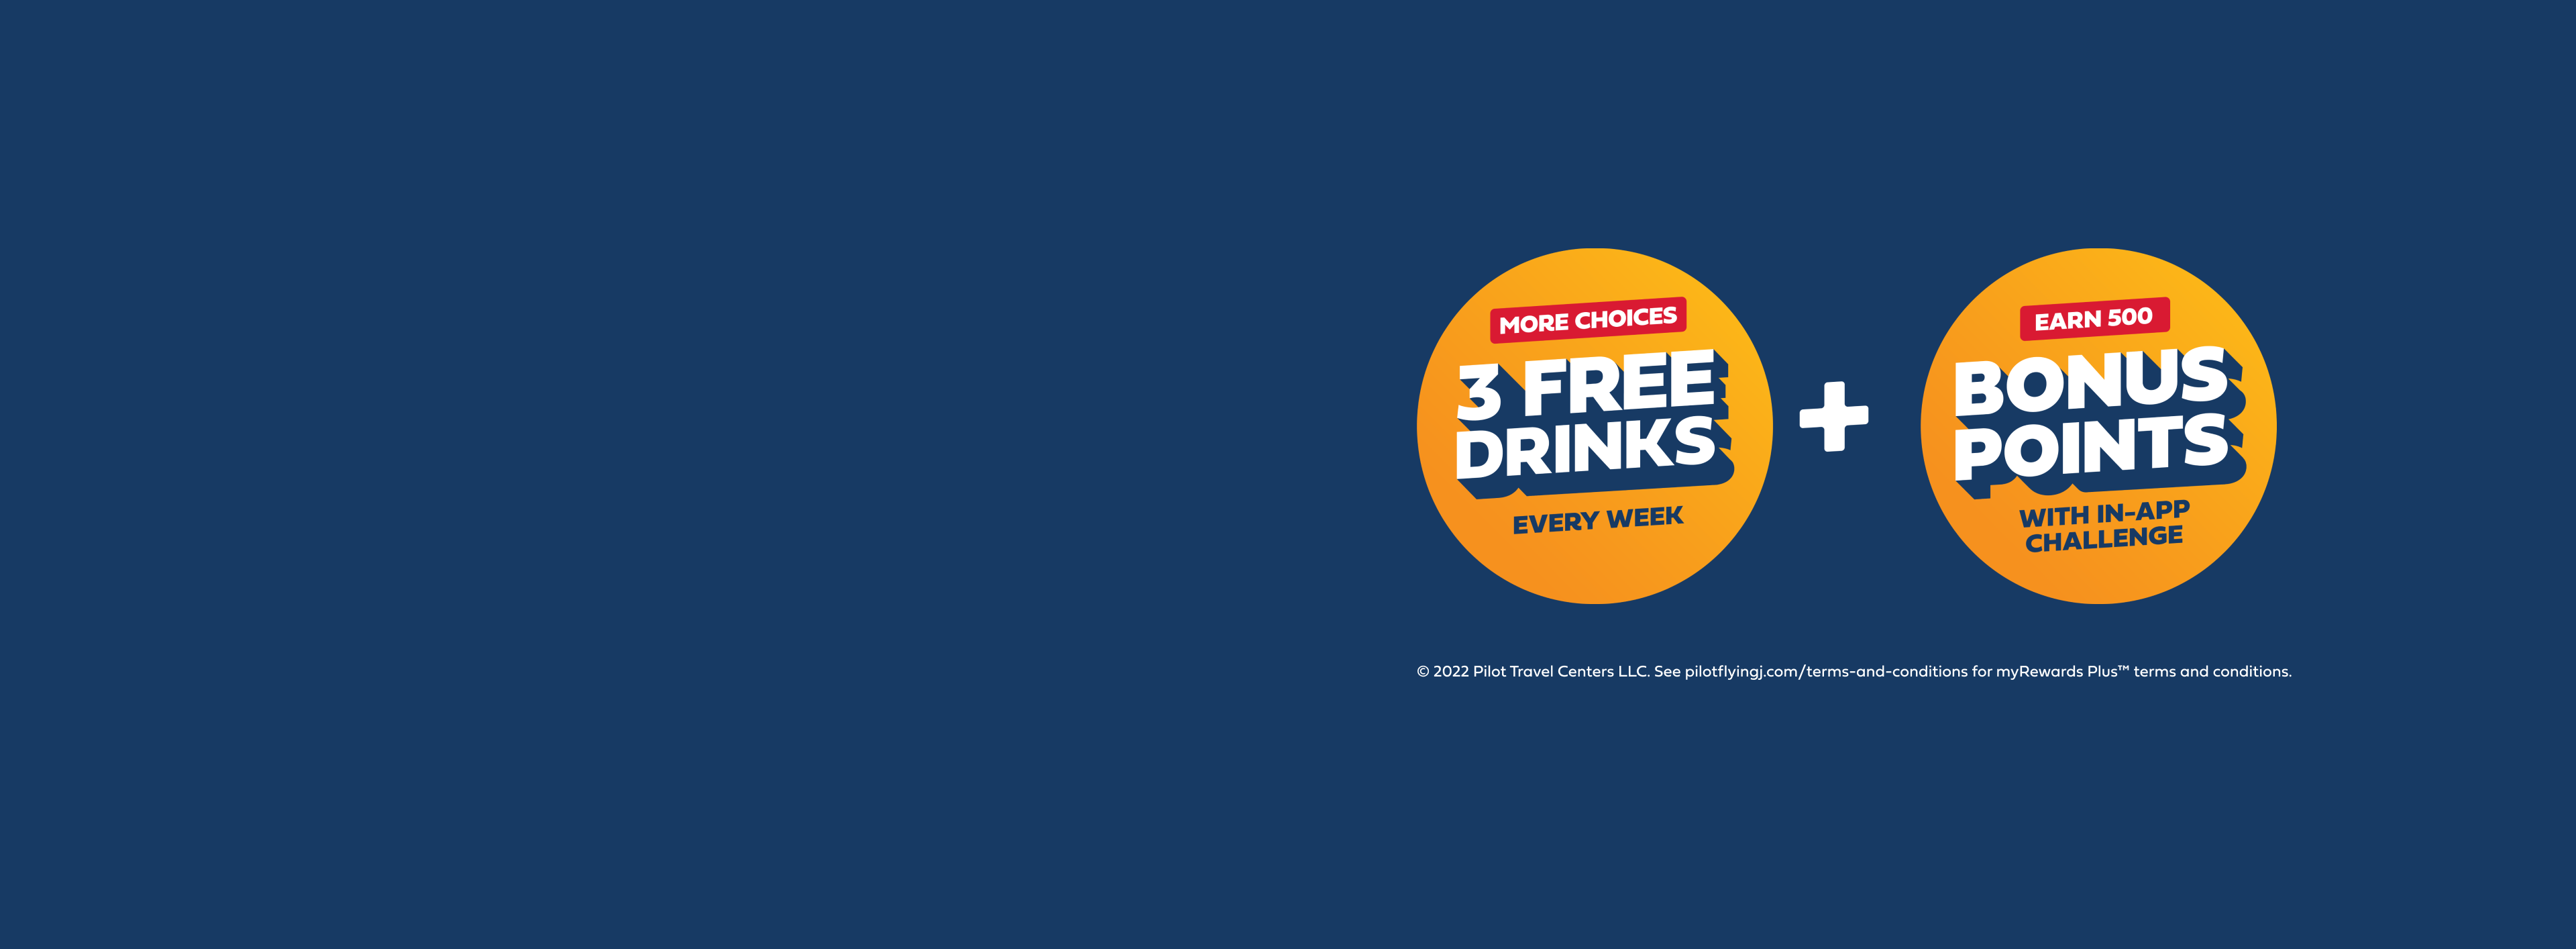 driver appreciation month - 3 free drinks plus bonus points for pro drivers